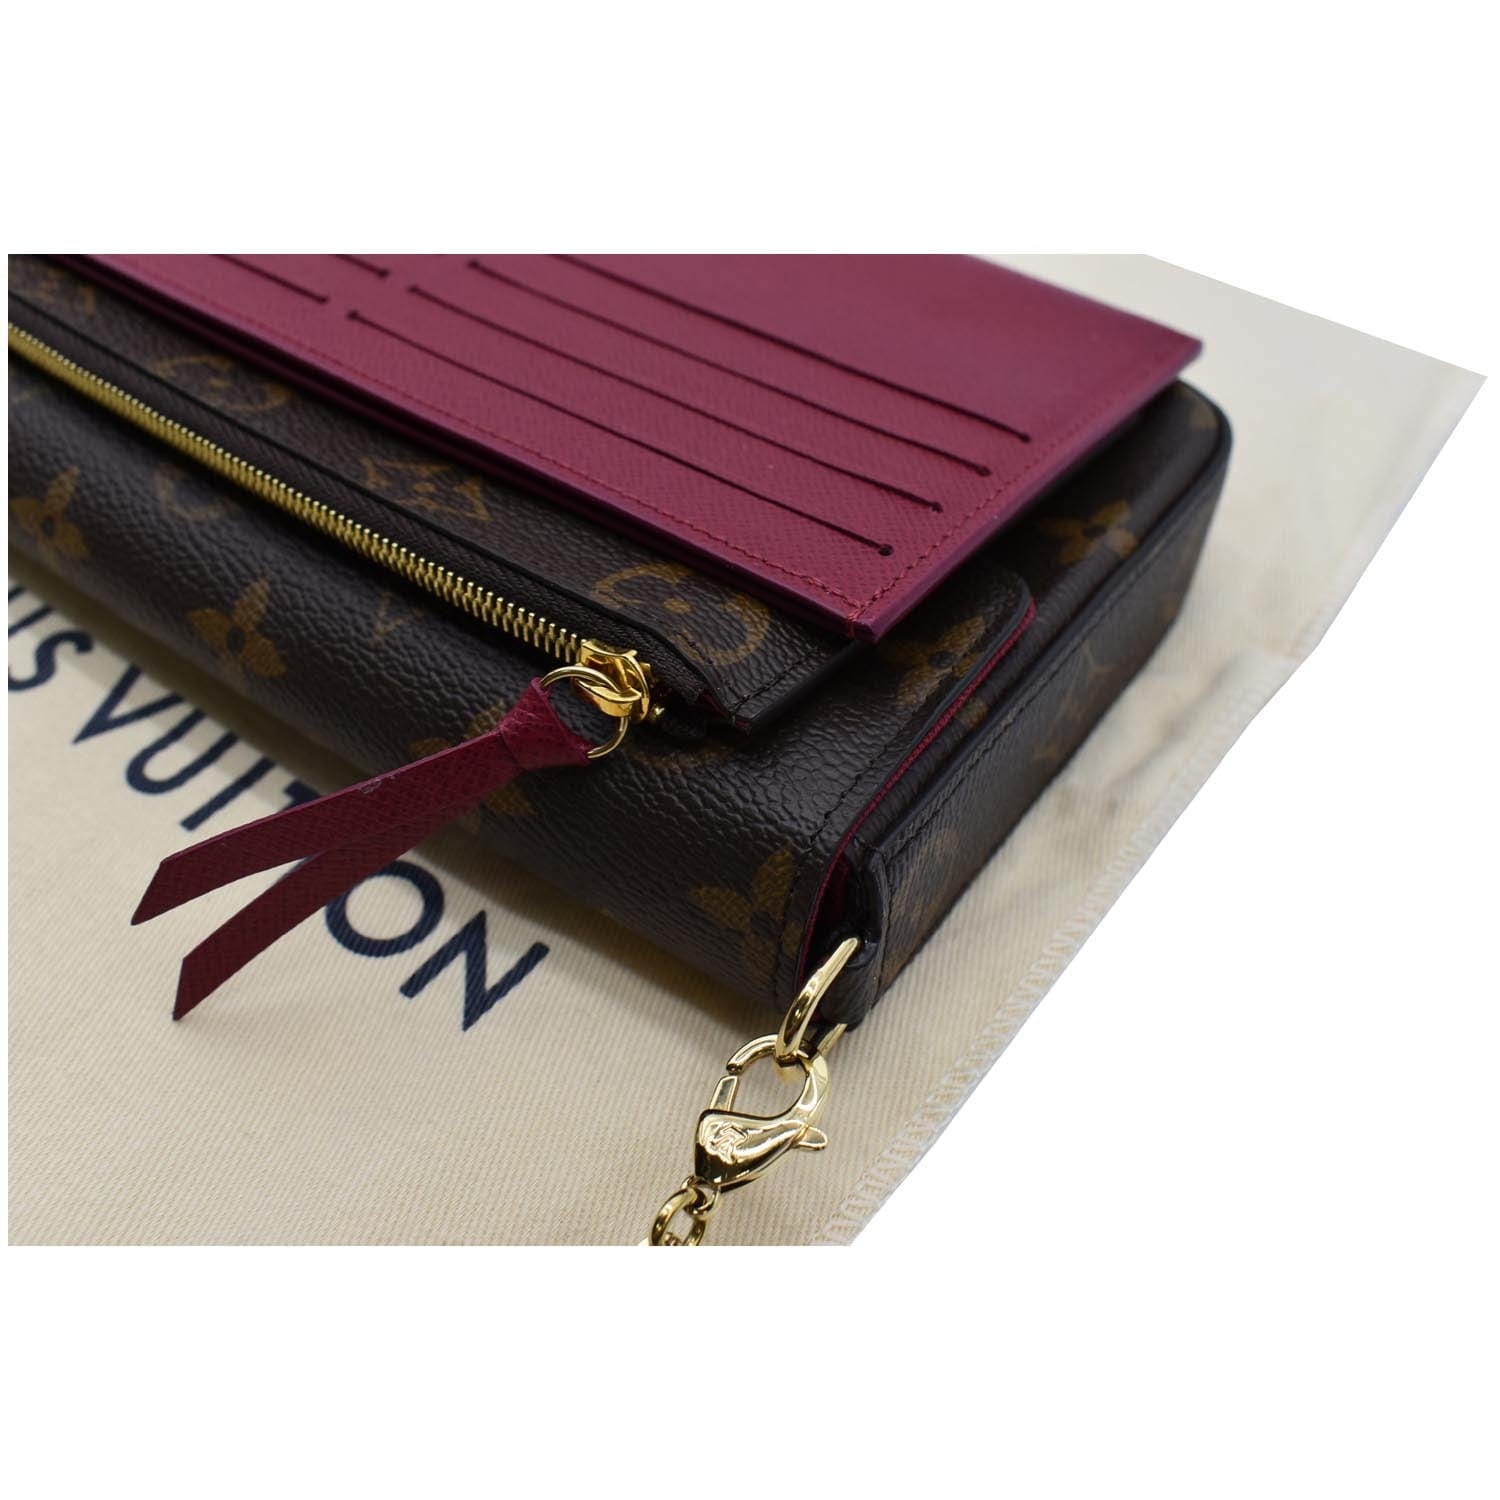 Monogram pochette felicie – burgundy – NATURALLYSTALLION